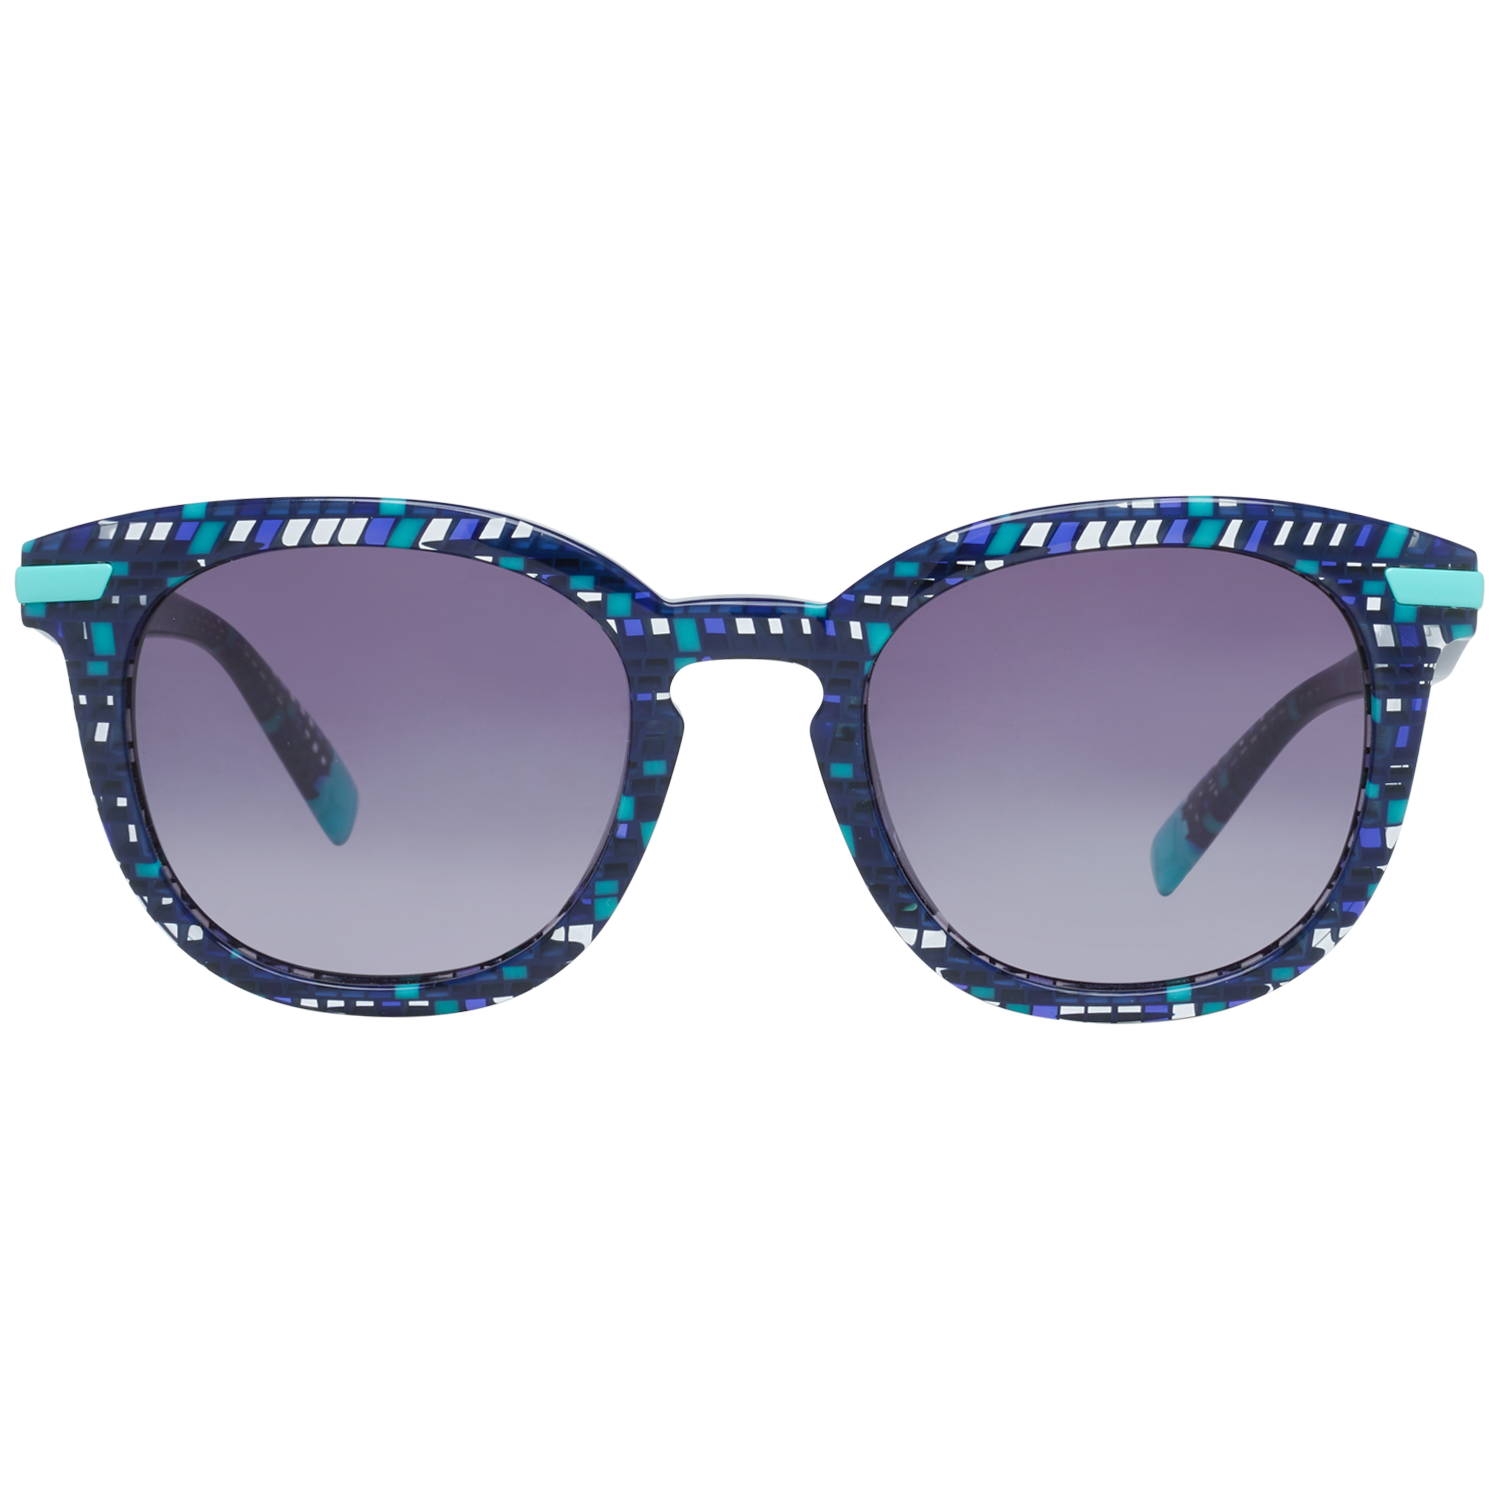 Furla Blue Women's Sunglasses